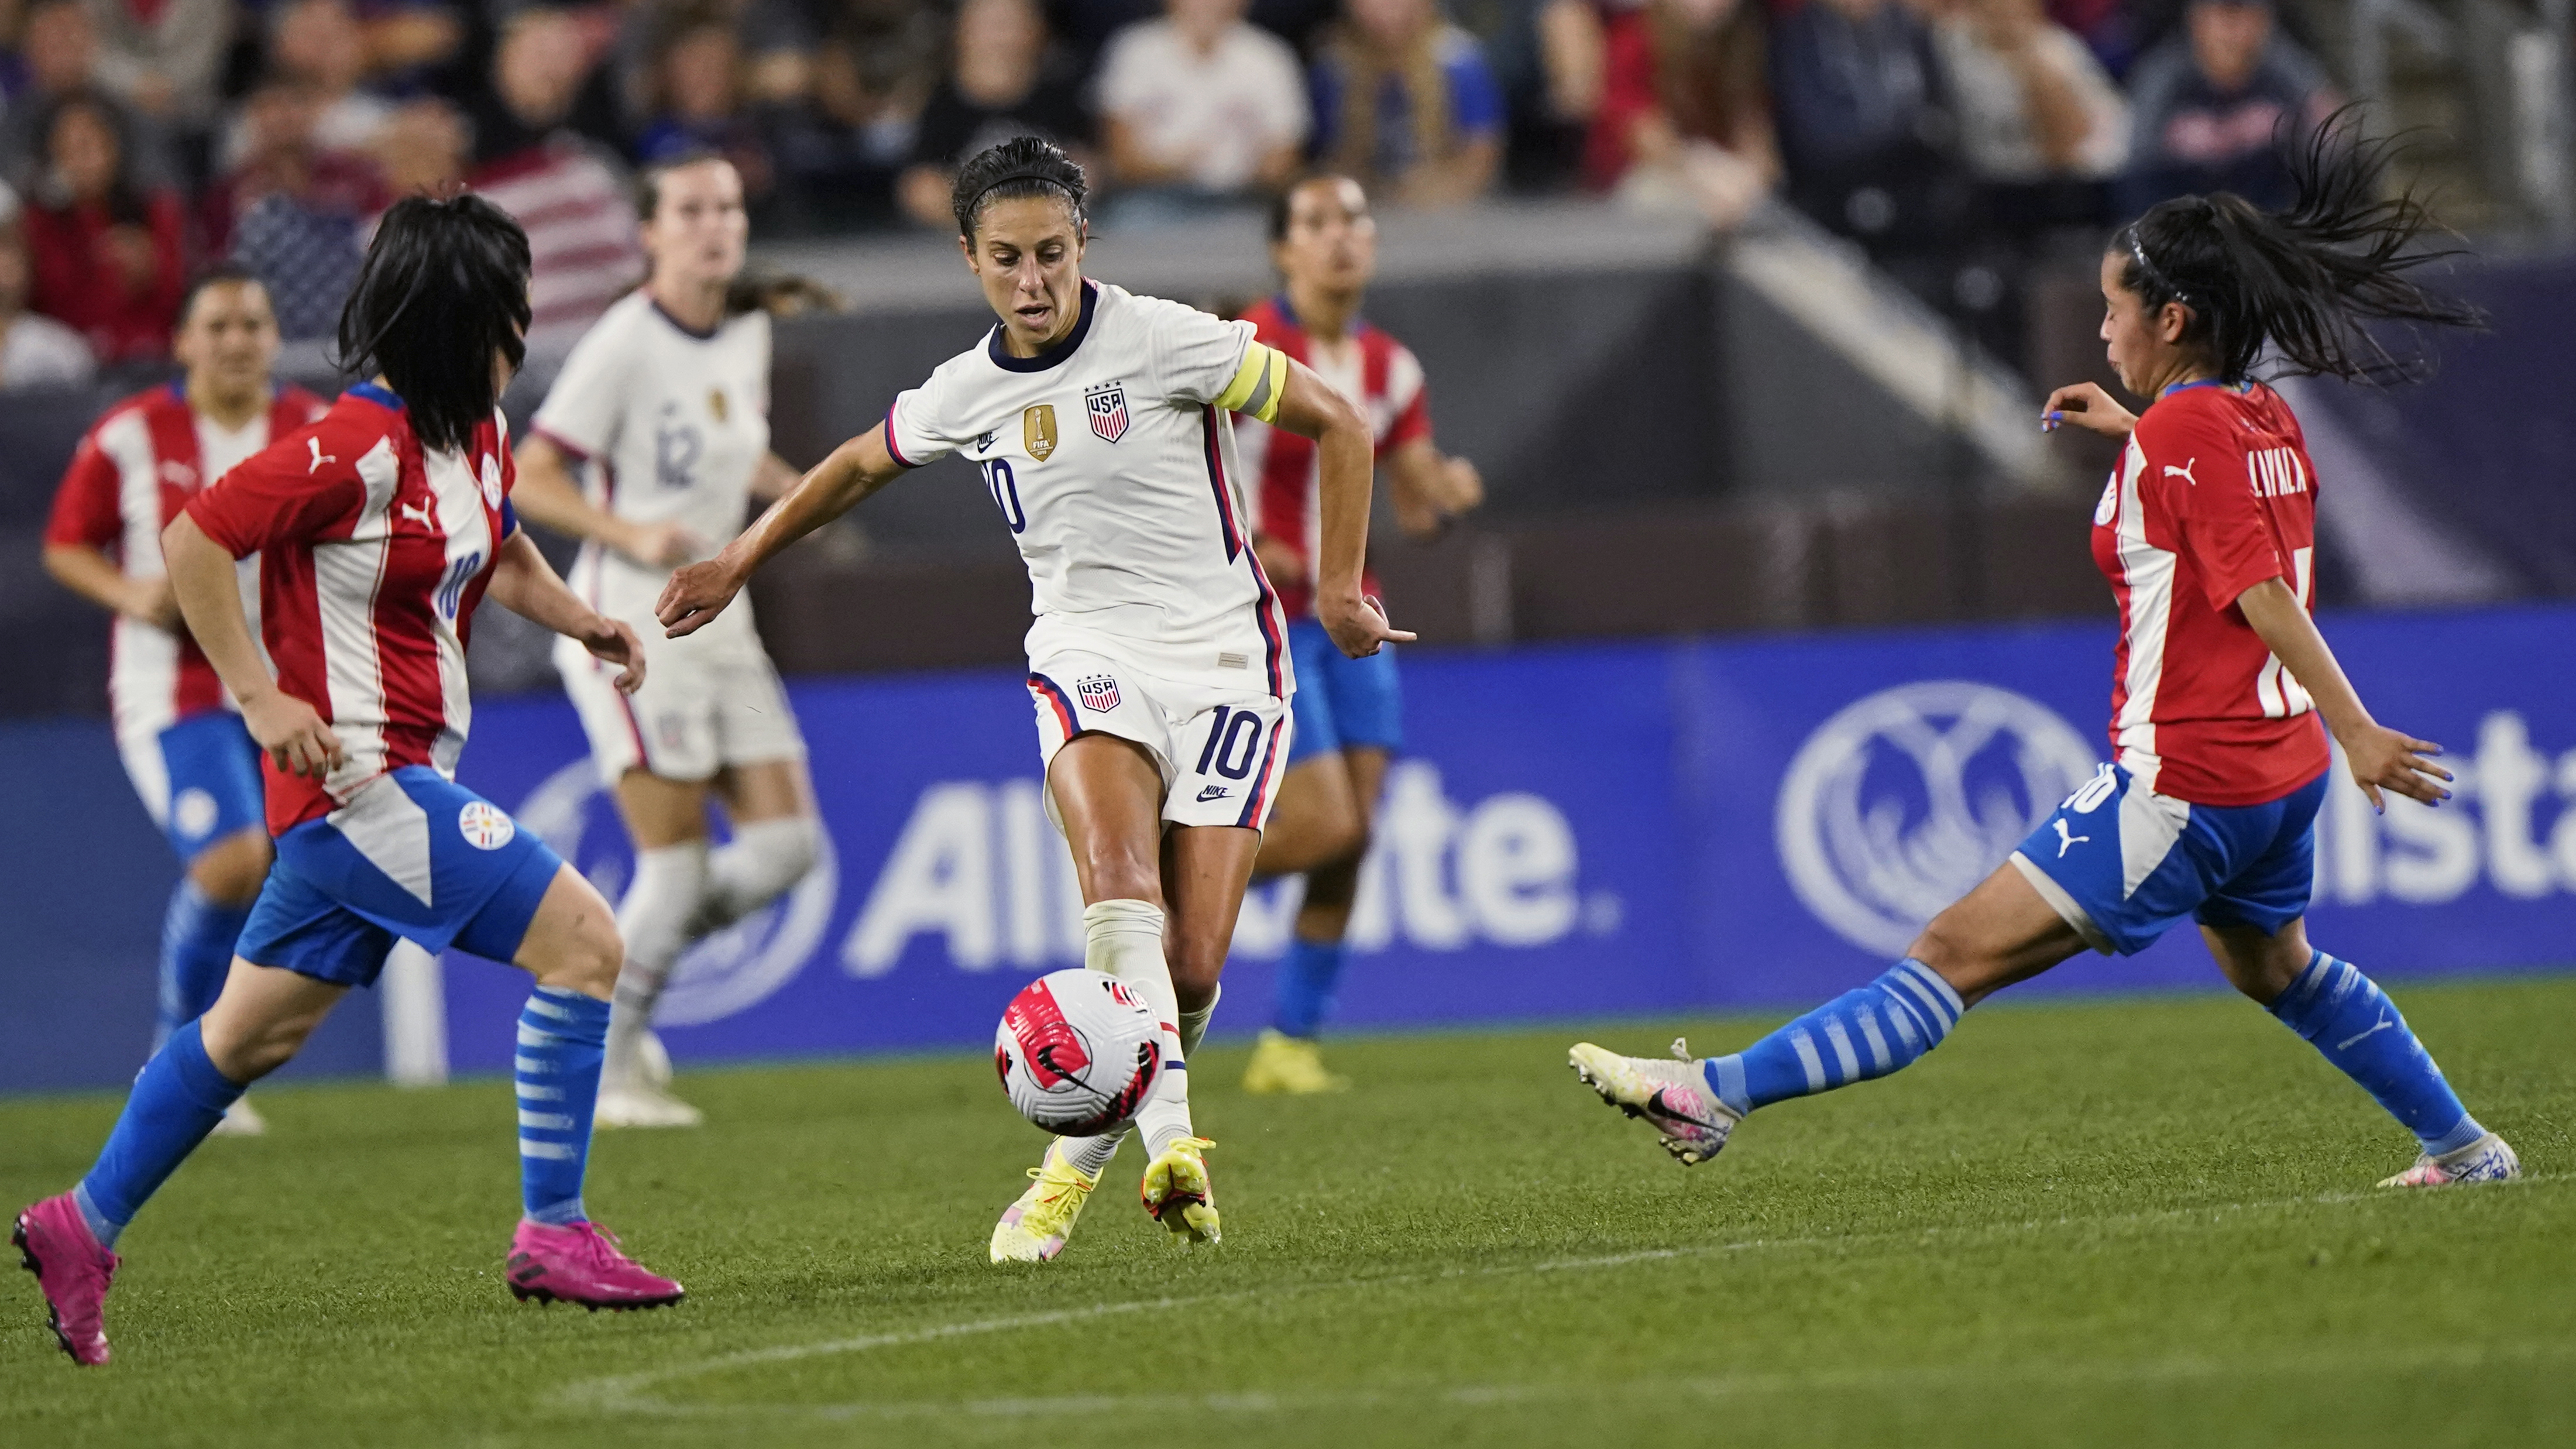 Carli Lloyd scores 5 goals, US women rout Paraguay 9-0